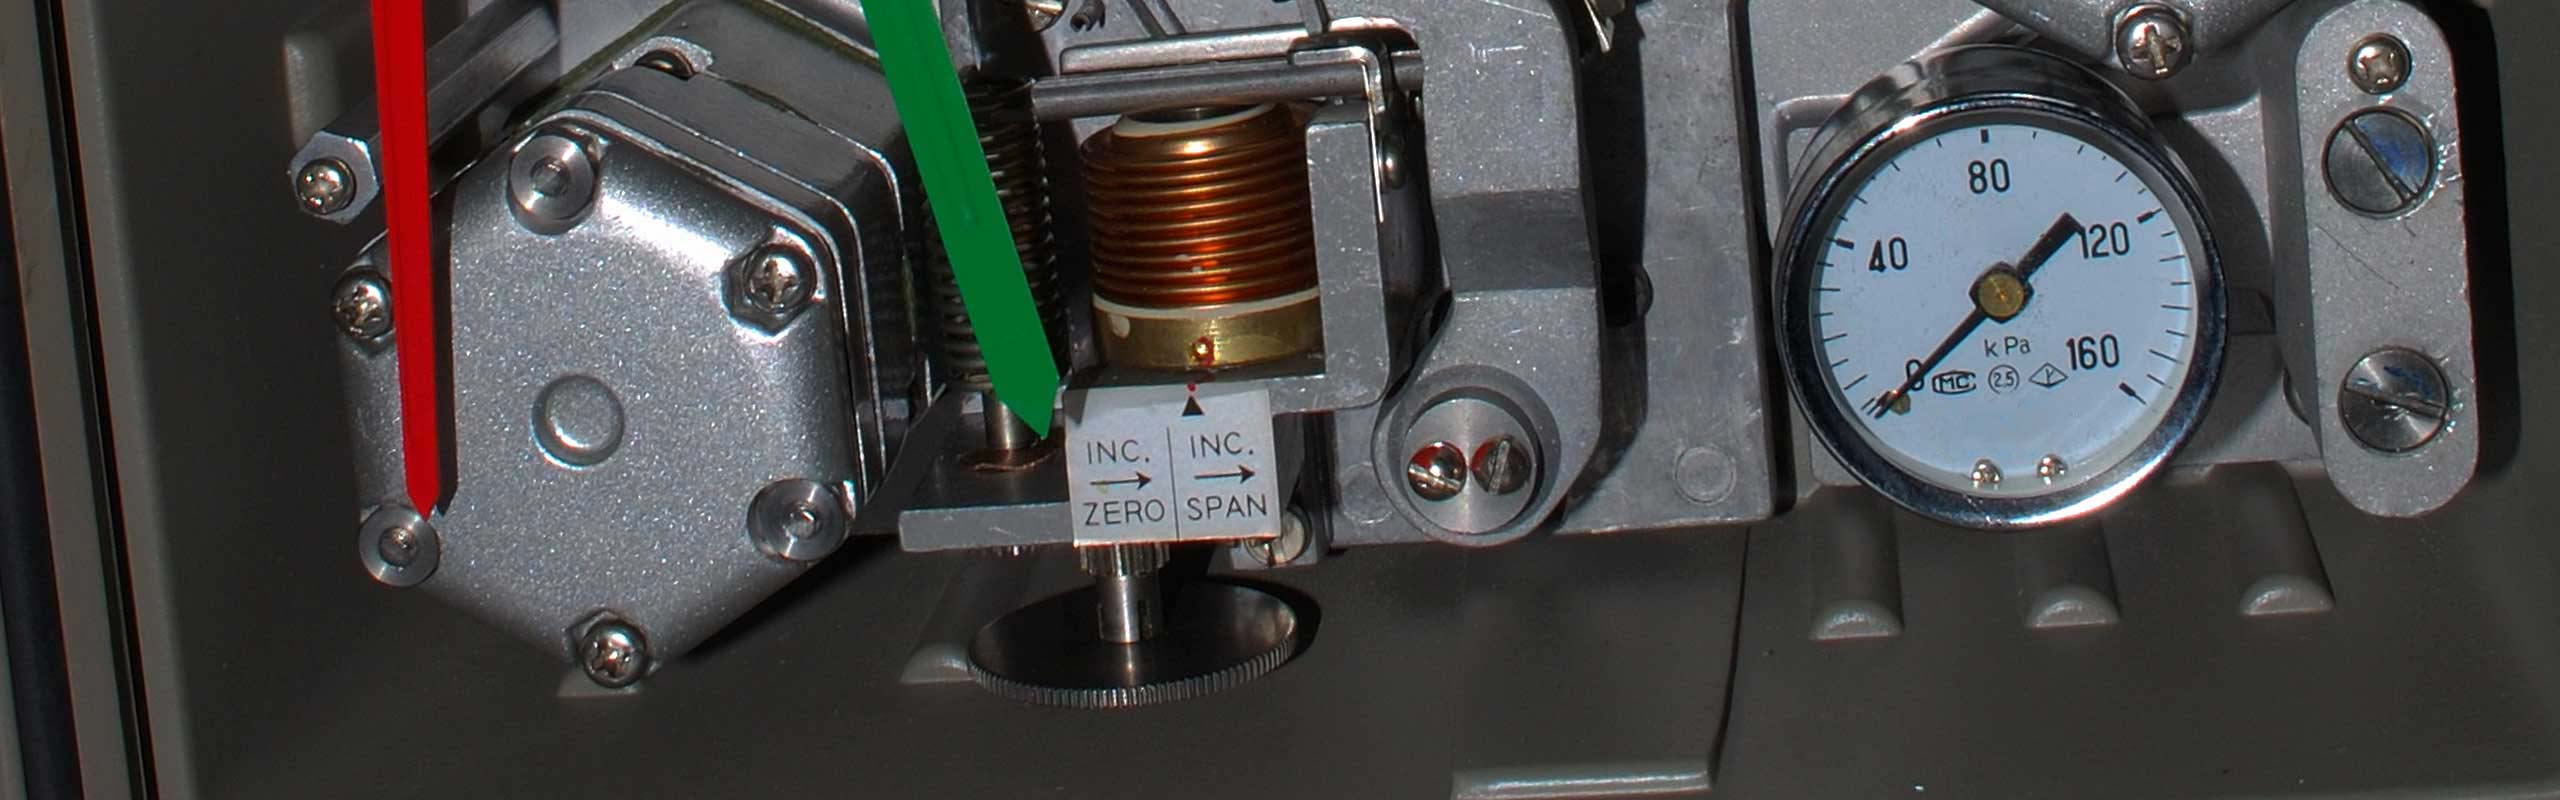 KDP 81/82 (High Static Pressure) Pneumatic Differential Pressure Transmitter